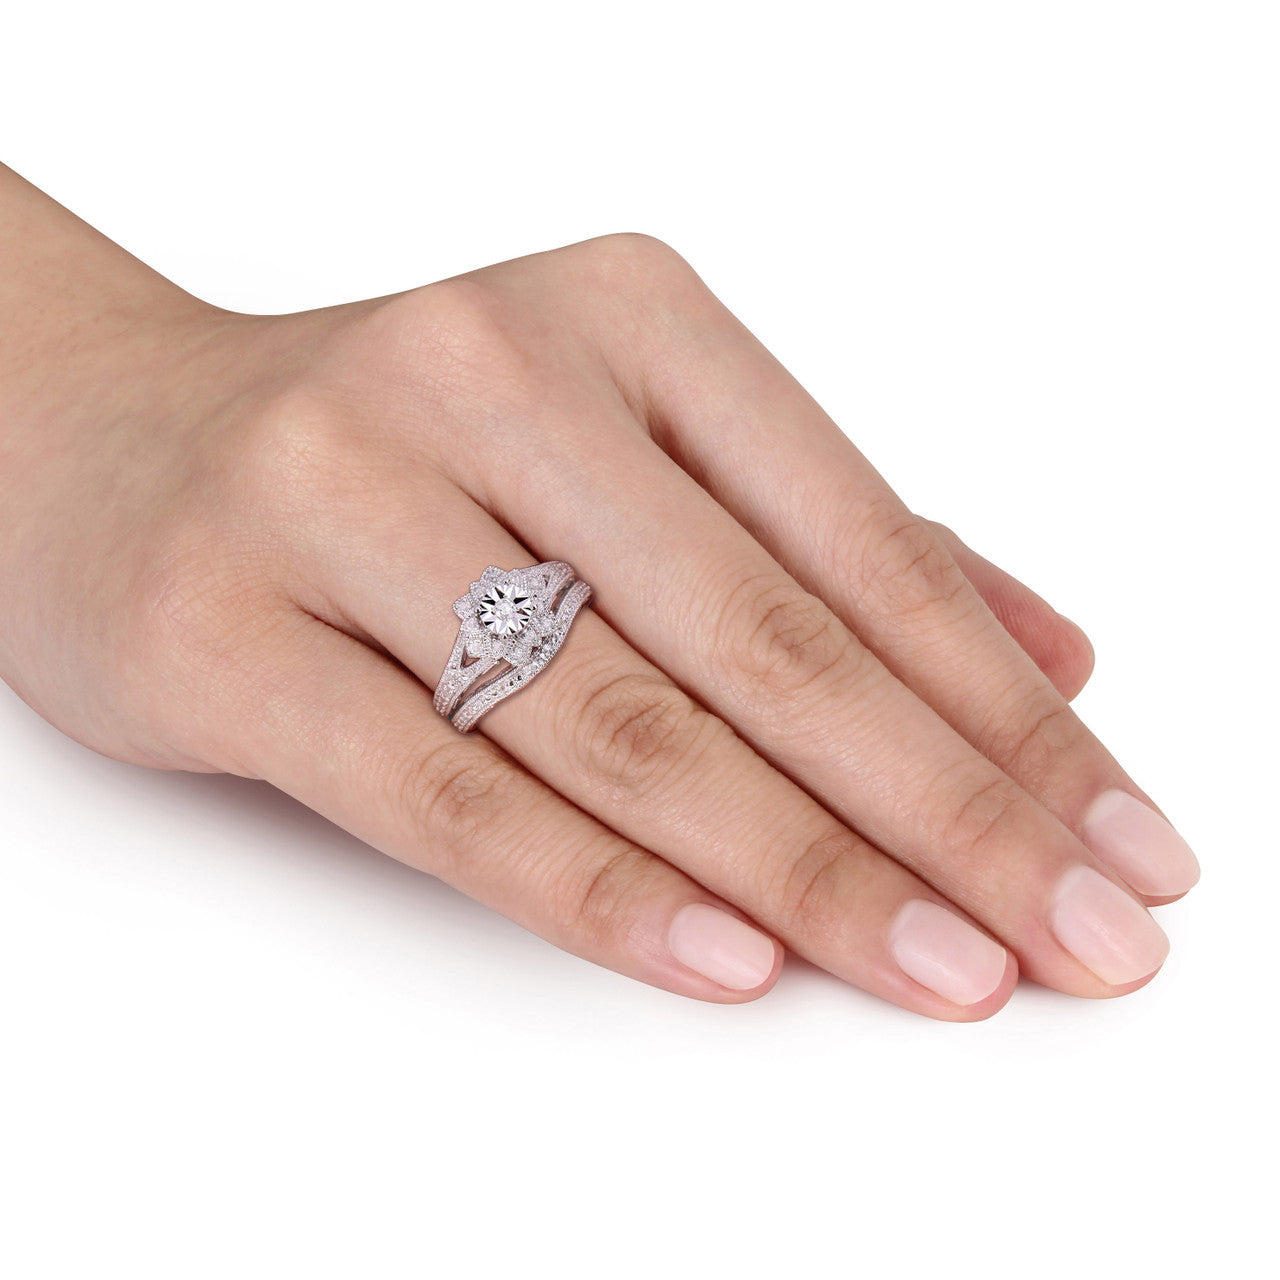 Ice Jewellery 1/5 CT TDW Diamond Flower Bridal Set Ring in Sterling Silver - 75000005411 | Ice Jewellery Australia